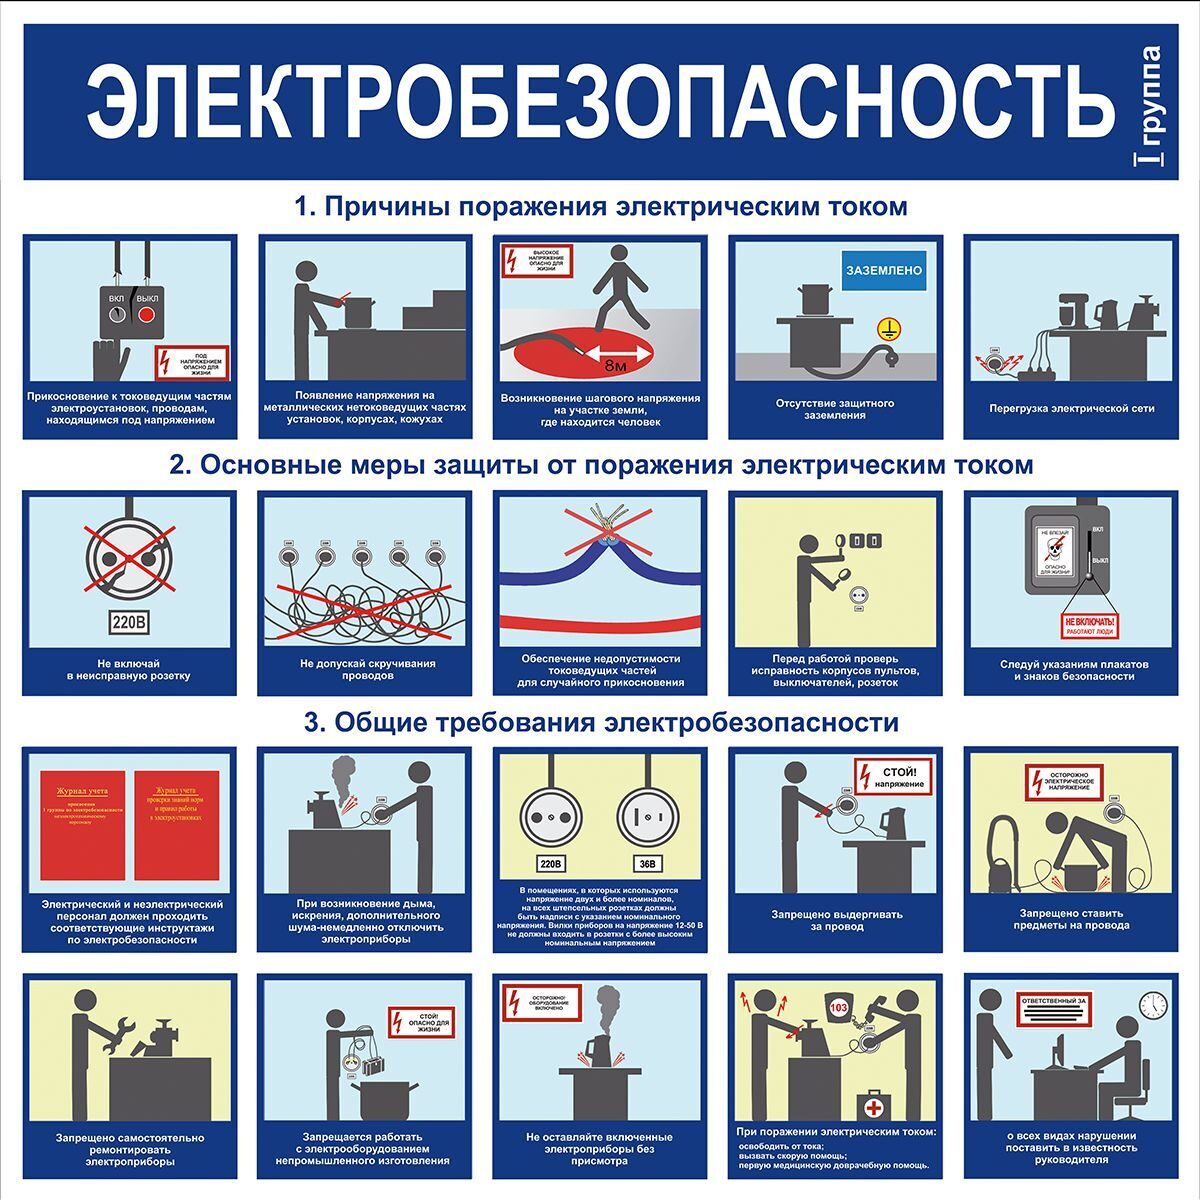 Электробезопасность 2 группа обучение atelectro ru. Стенд по охране труда электробезопасность в электроустановках. Правила безопасности работы с электрическим током. Плакат «электробезопасность». Э̆̈л̆̈ӗ̈к̆̈т̆̈р̆̈о̆̈ б̆̈ӗ̈з̆̈о̆̈п̆̈ӑ̈с̆̈н̆̈о̆̈с̆̈т̆̈ь̆̈.